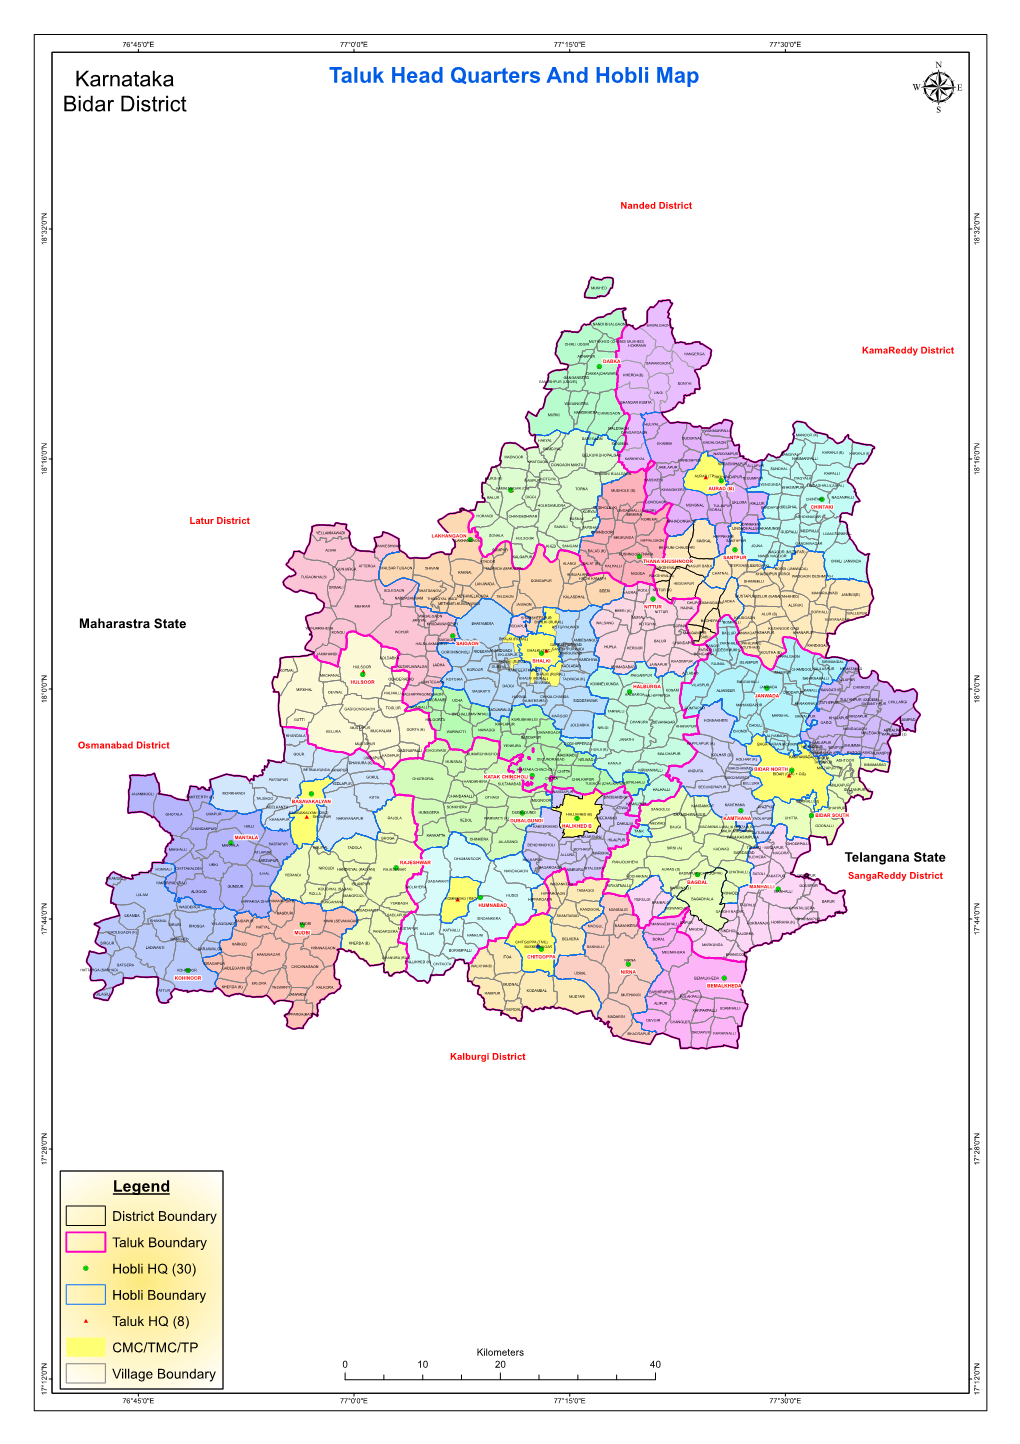 Karnataka Bidar District Taluk Head Quarters and Hobli